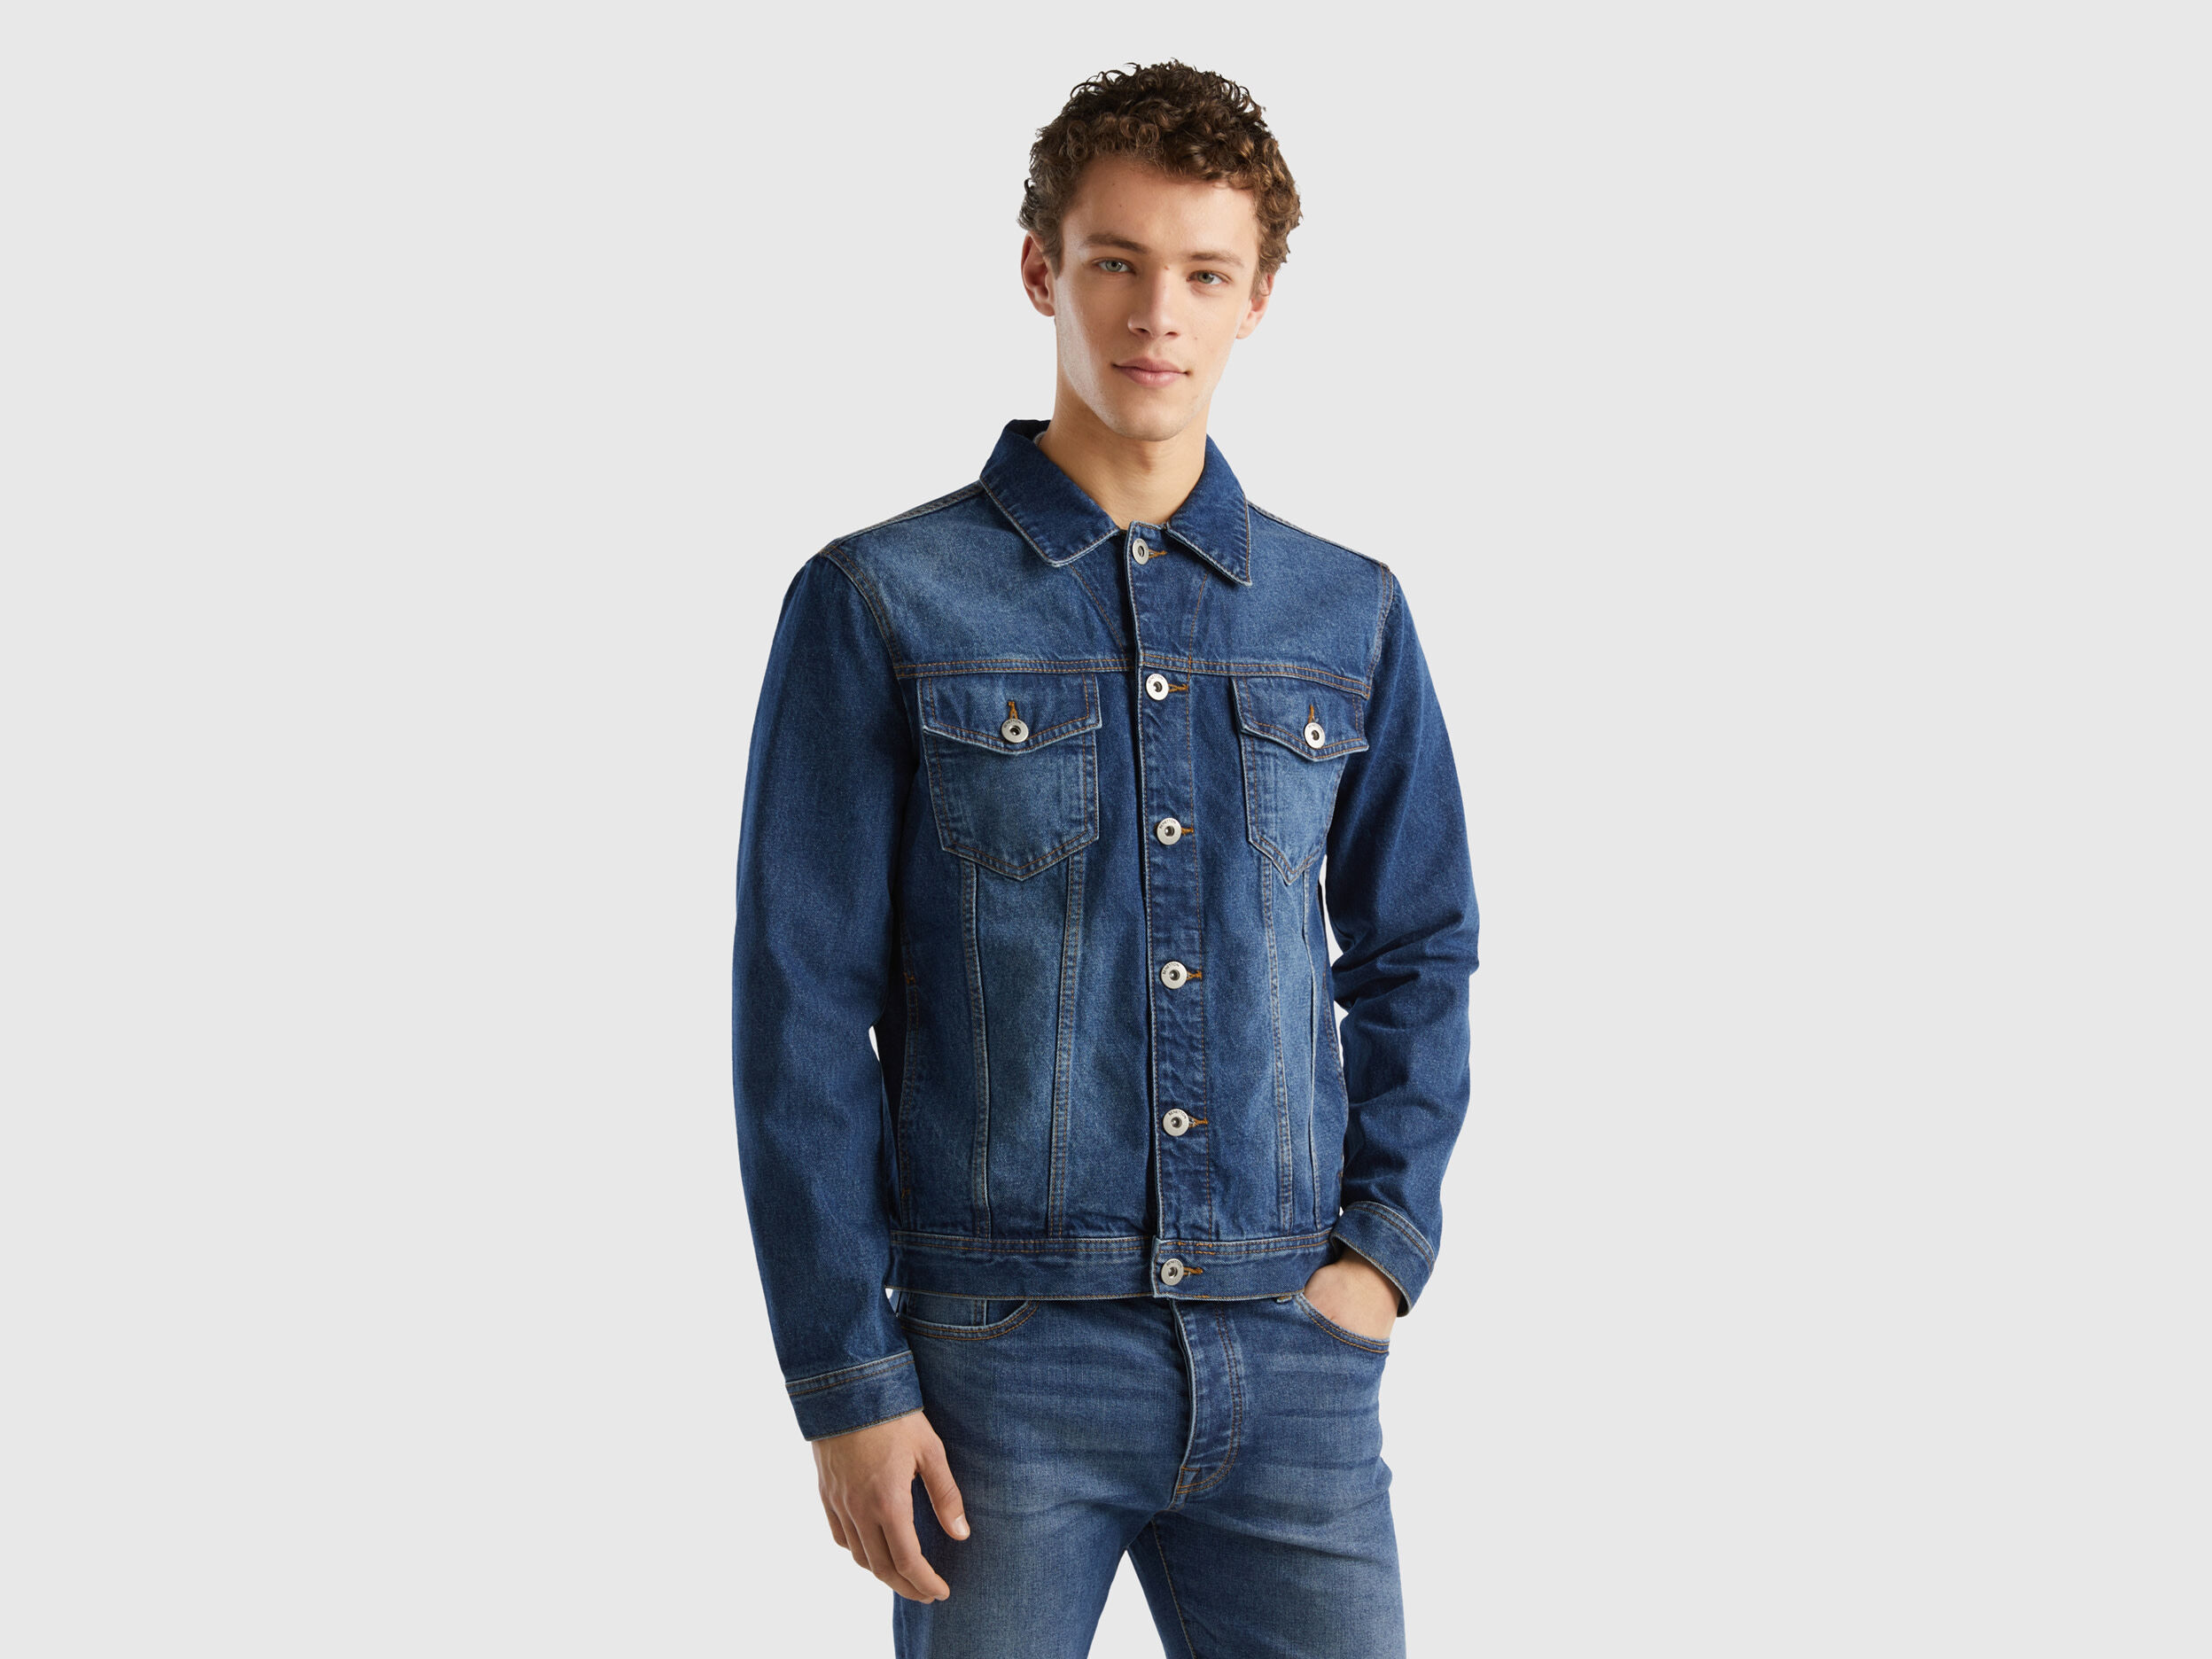 Regular fit jean jacket